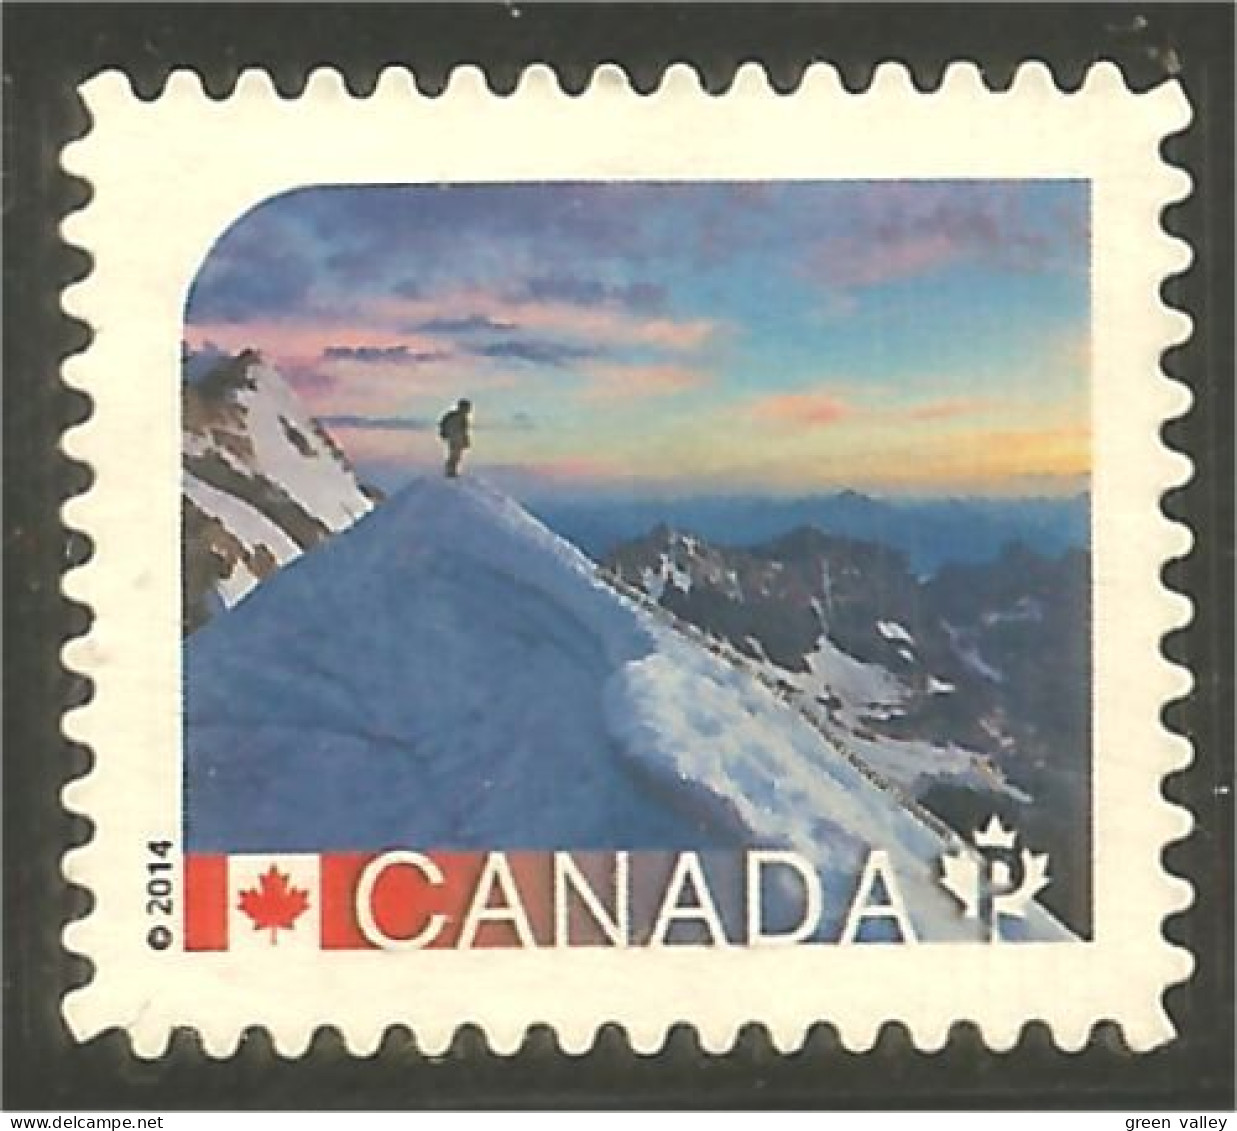 Canada Alpinisme Montagne Escalade Mountain Climbing Mint No Gum (309b) - Climbing